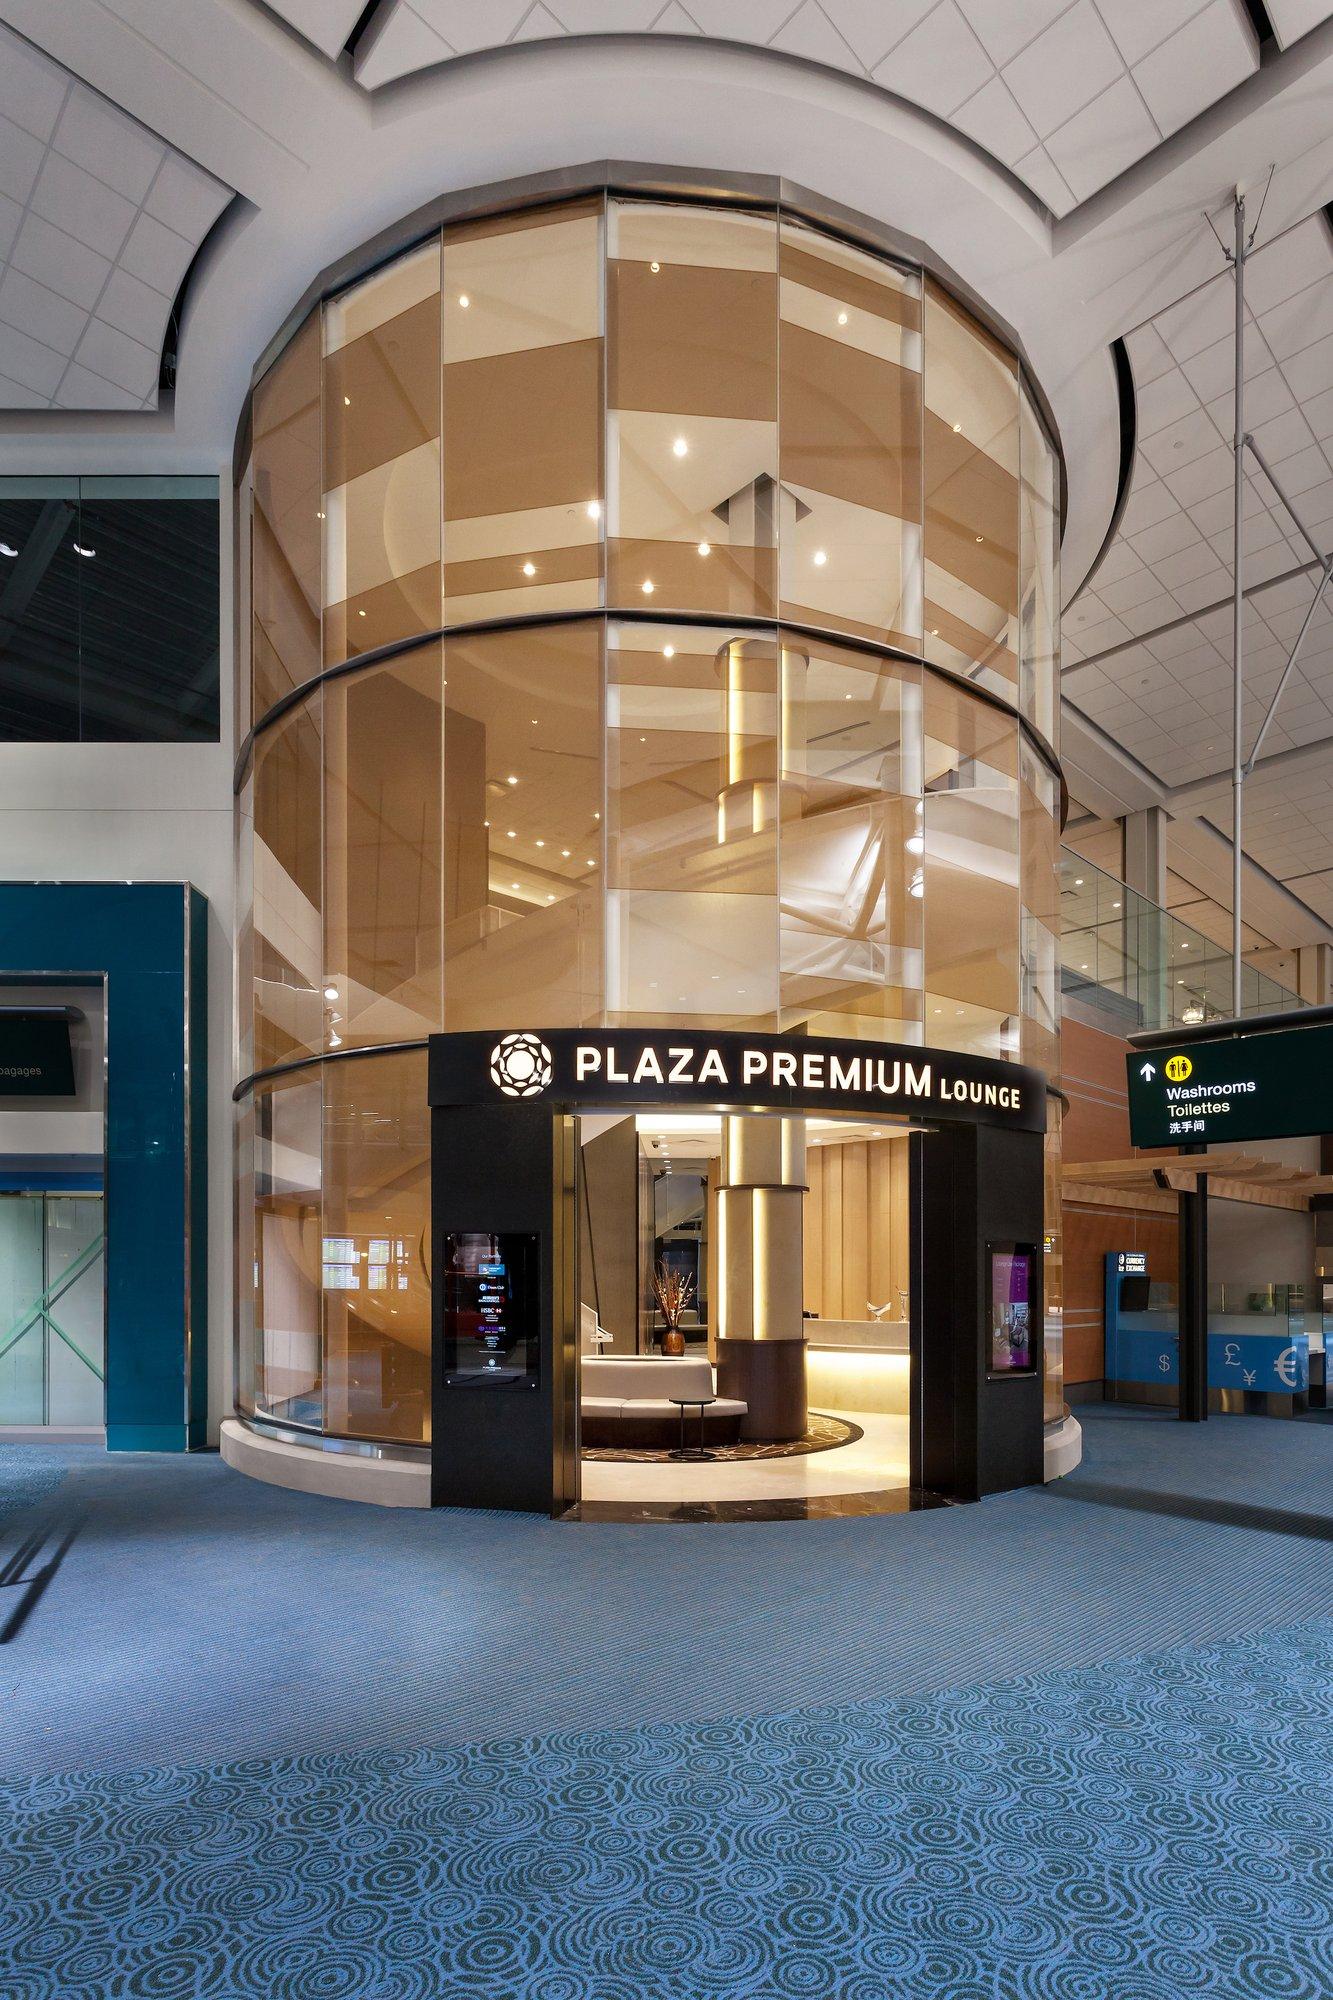 Plaza Premium Lounge (Domestic Gate B15) image 61 of 72